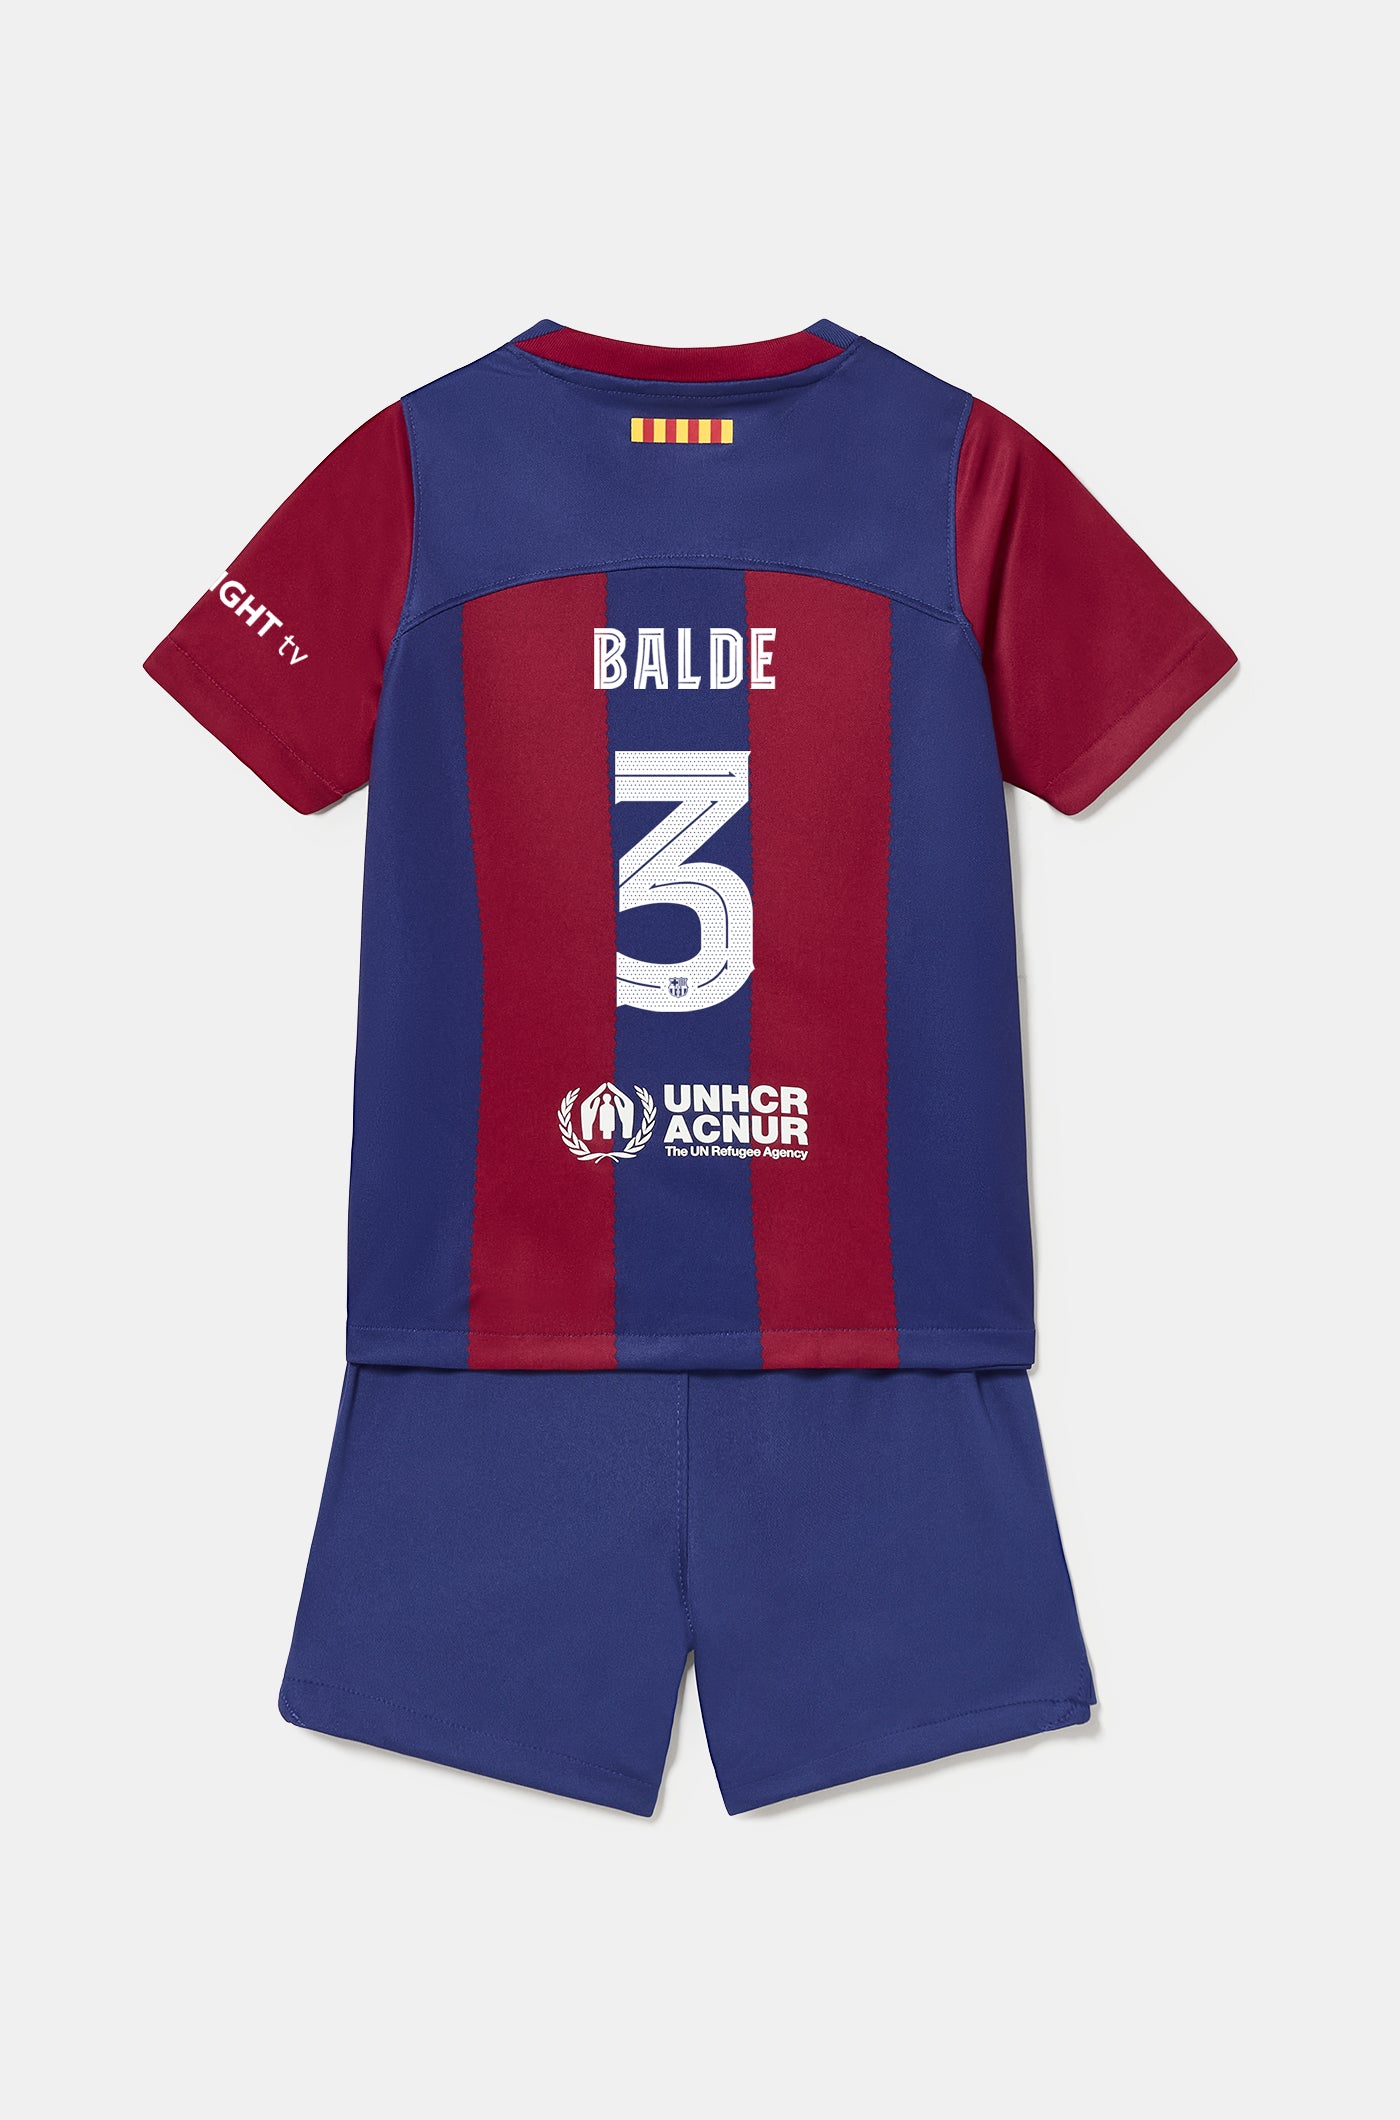 FC Barcelona home Kit 23/24 - Younger Kids  - BALDE